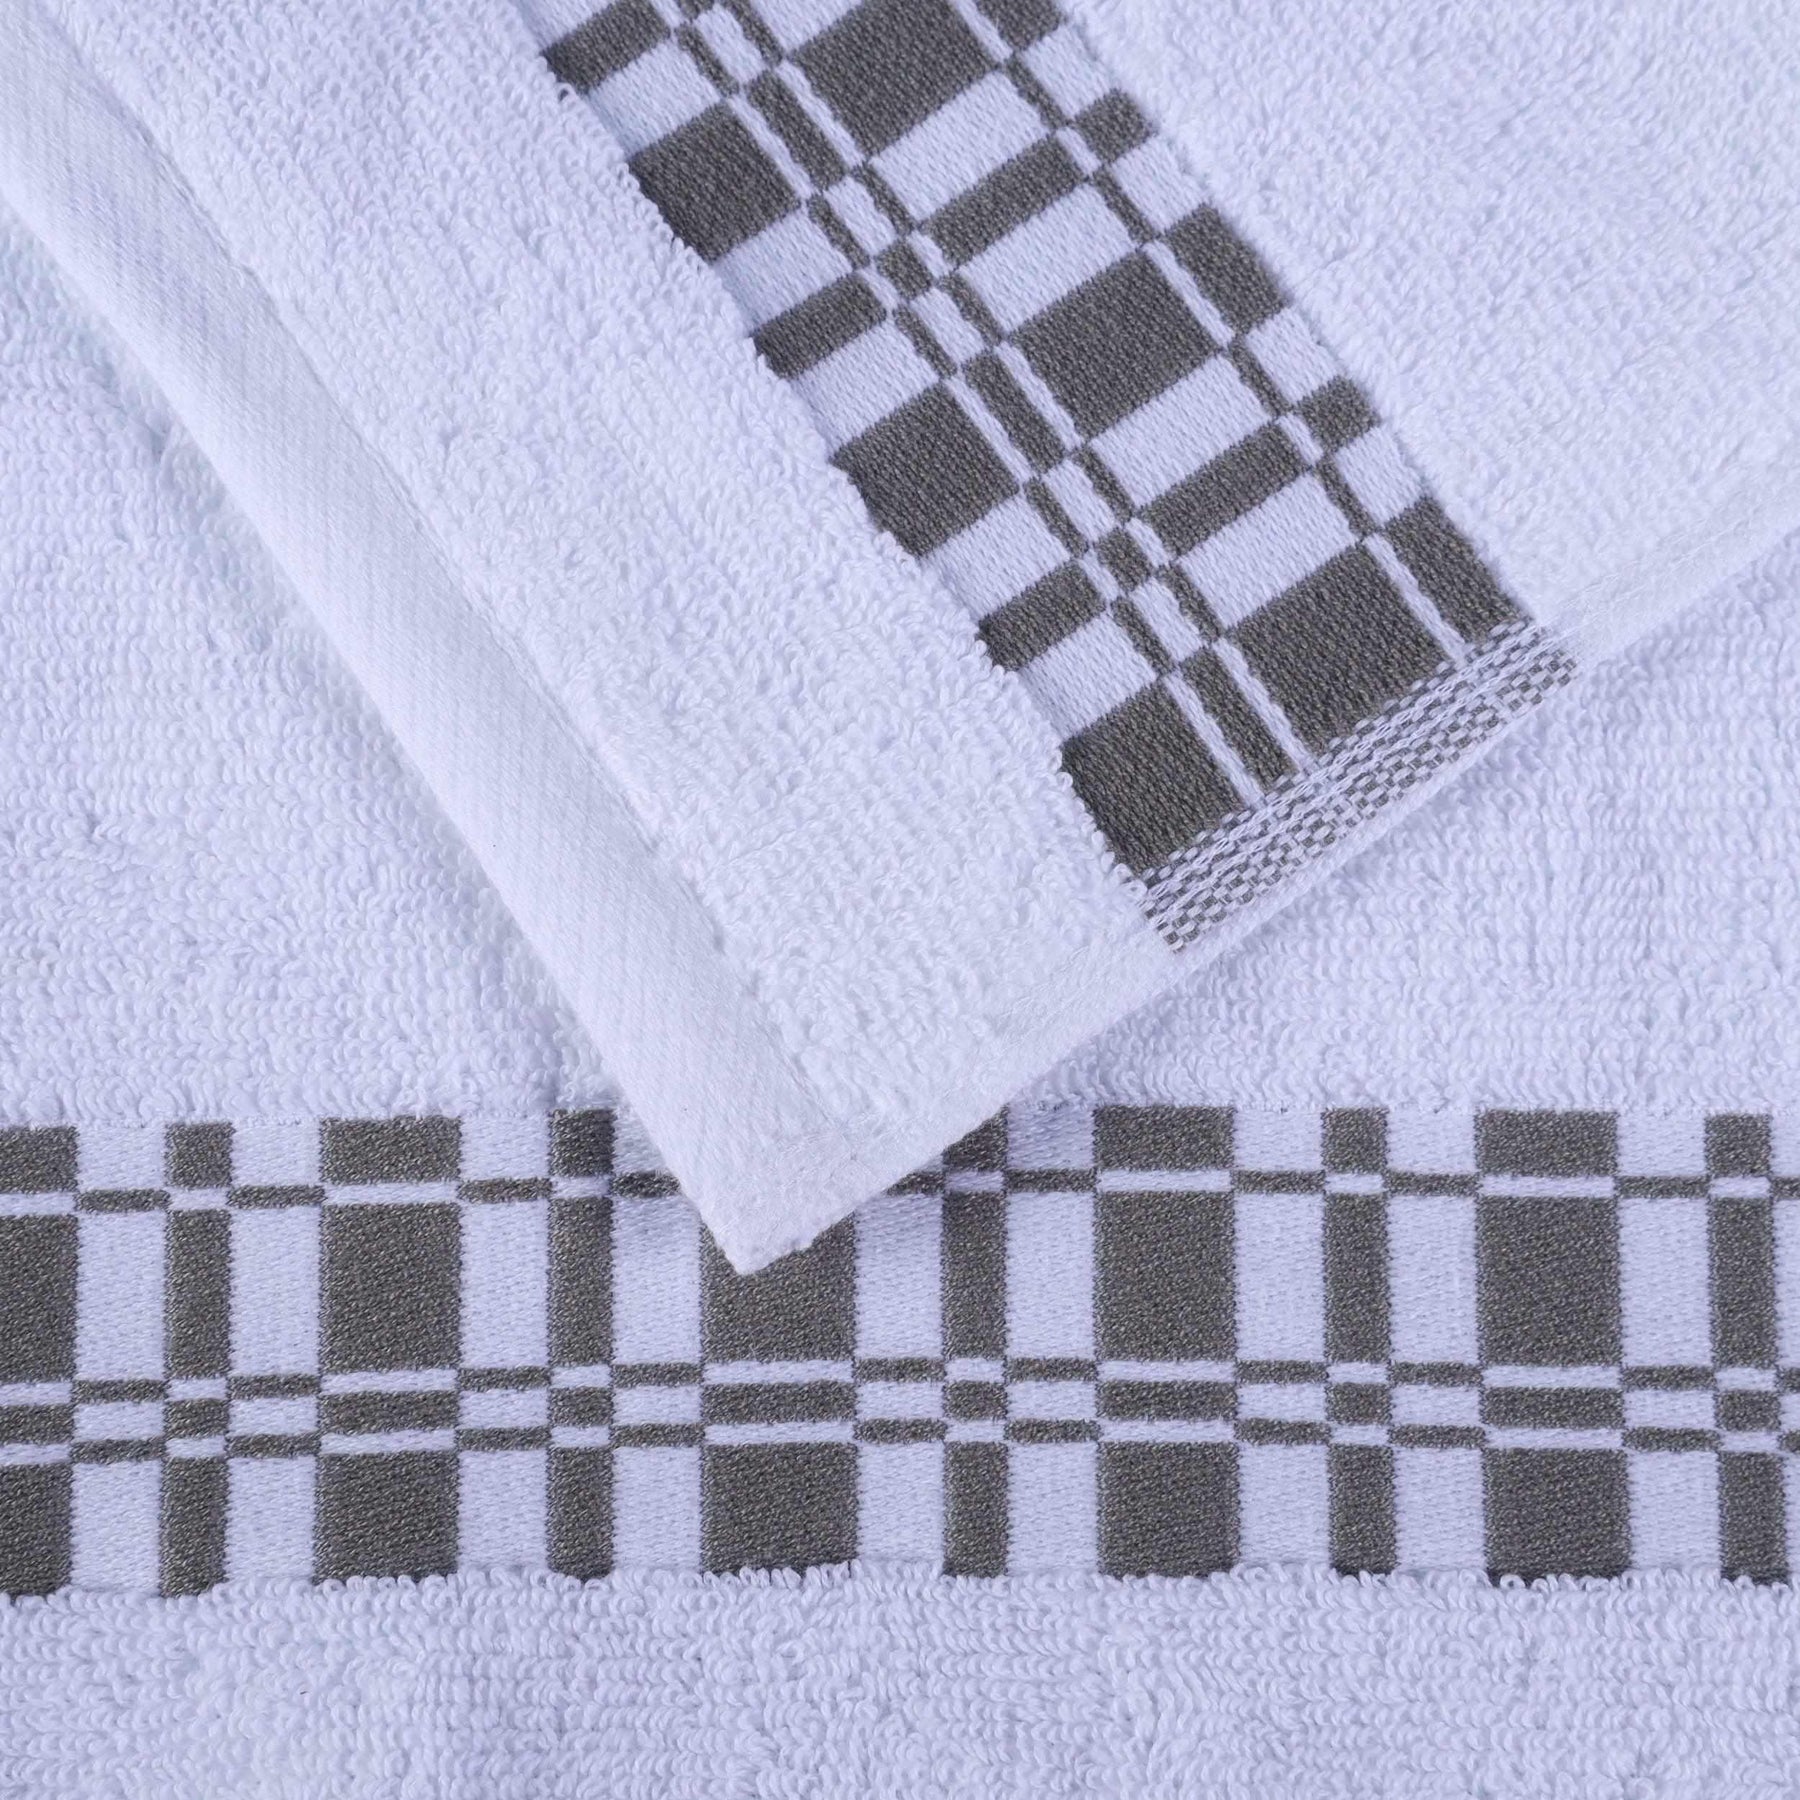  Superior Larissa Cotton 8-Piece Assorted Towel Set with Geometric Embroidered Jacquard Border - White